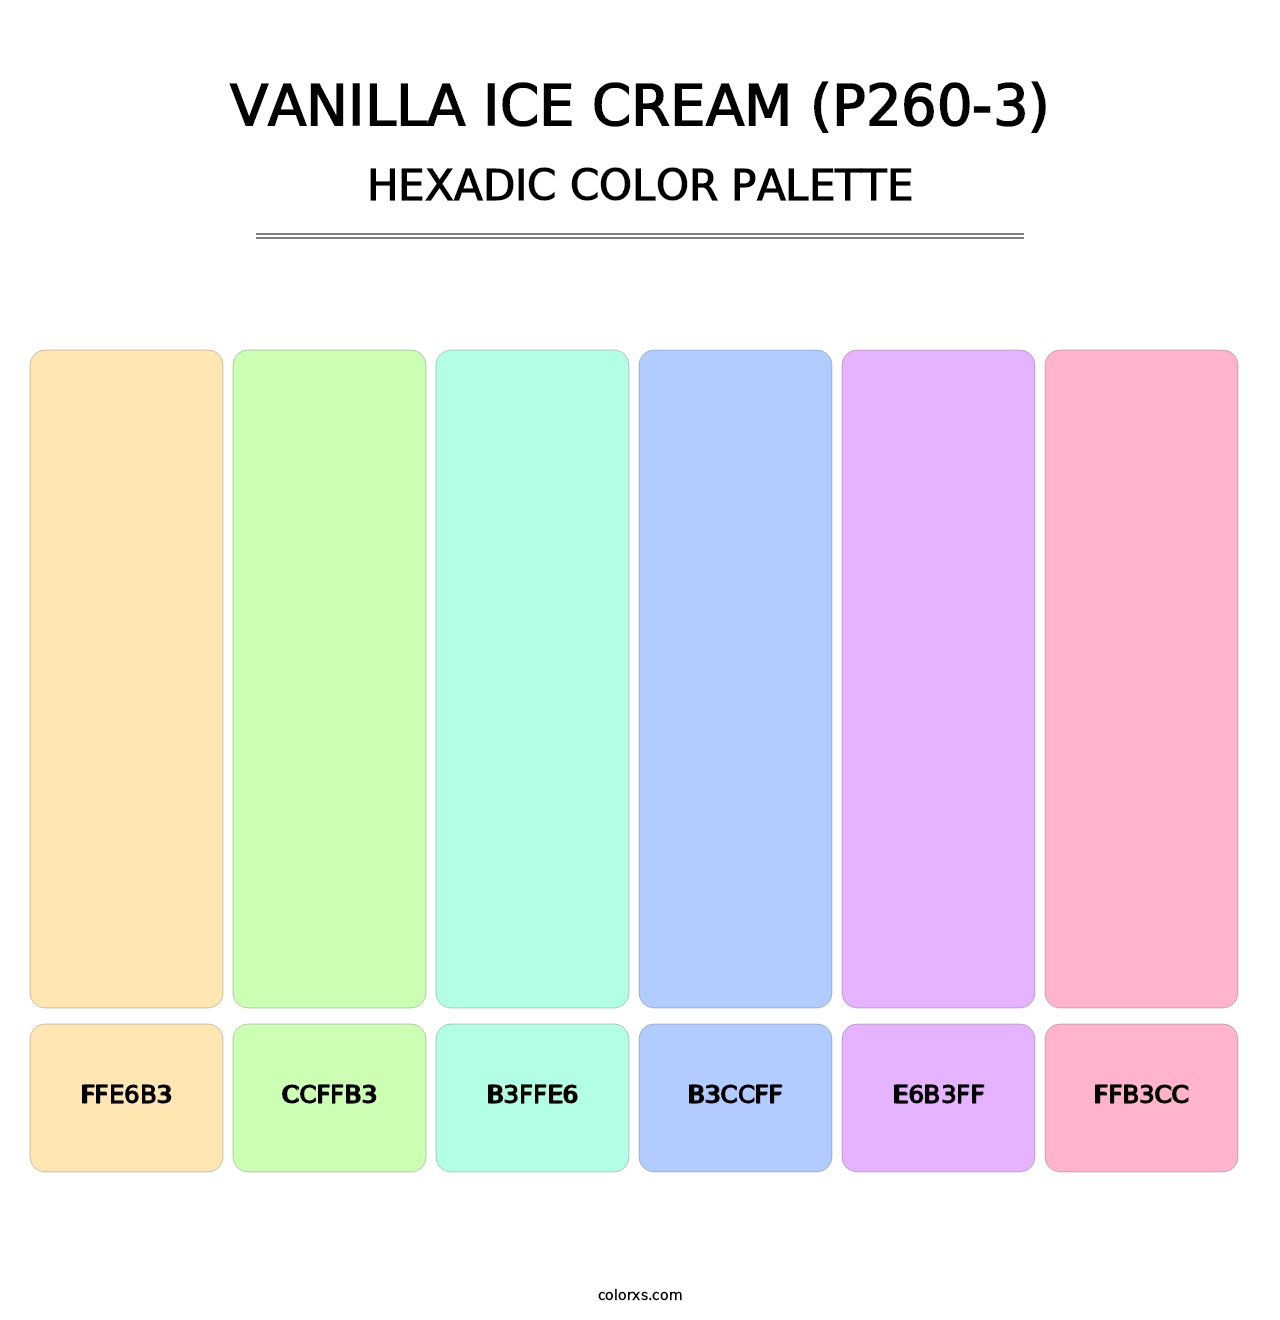 Vanilla Ice Cream (P260-3) - Hexadic Color Palette